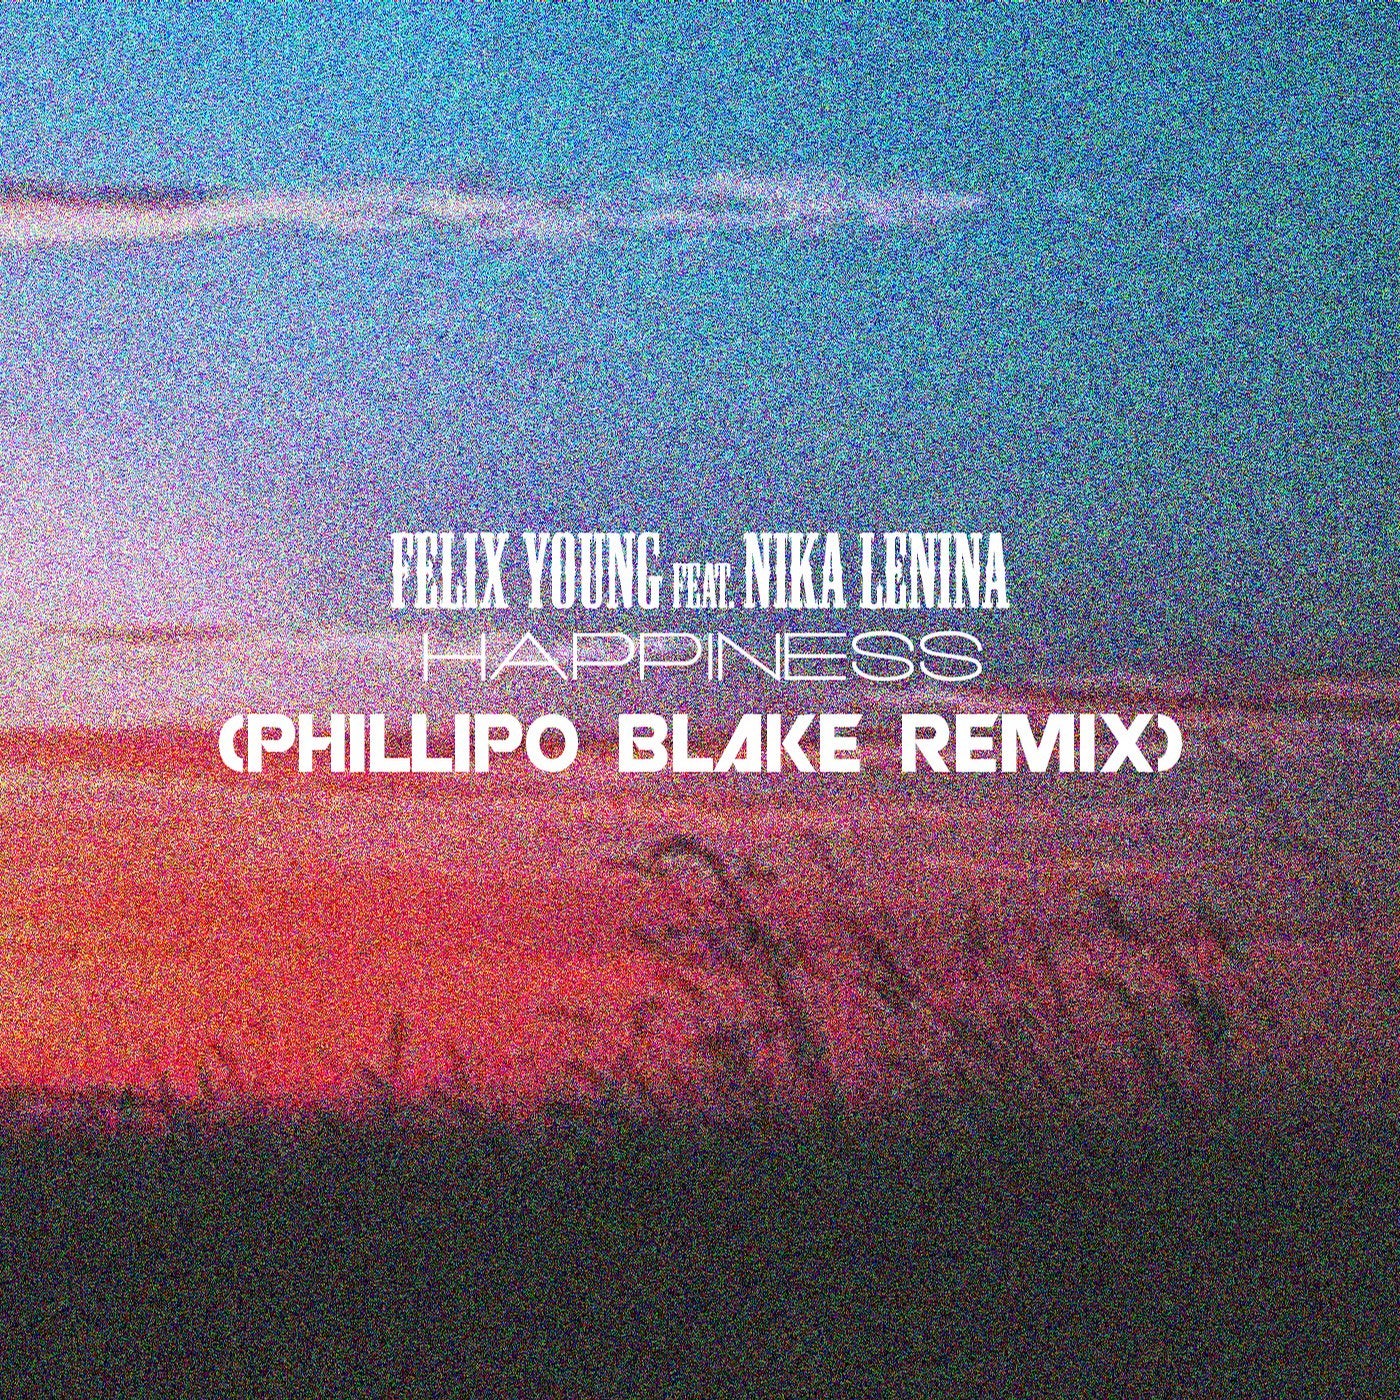 Happiness (Phillipo Blake Remix)